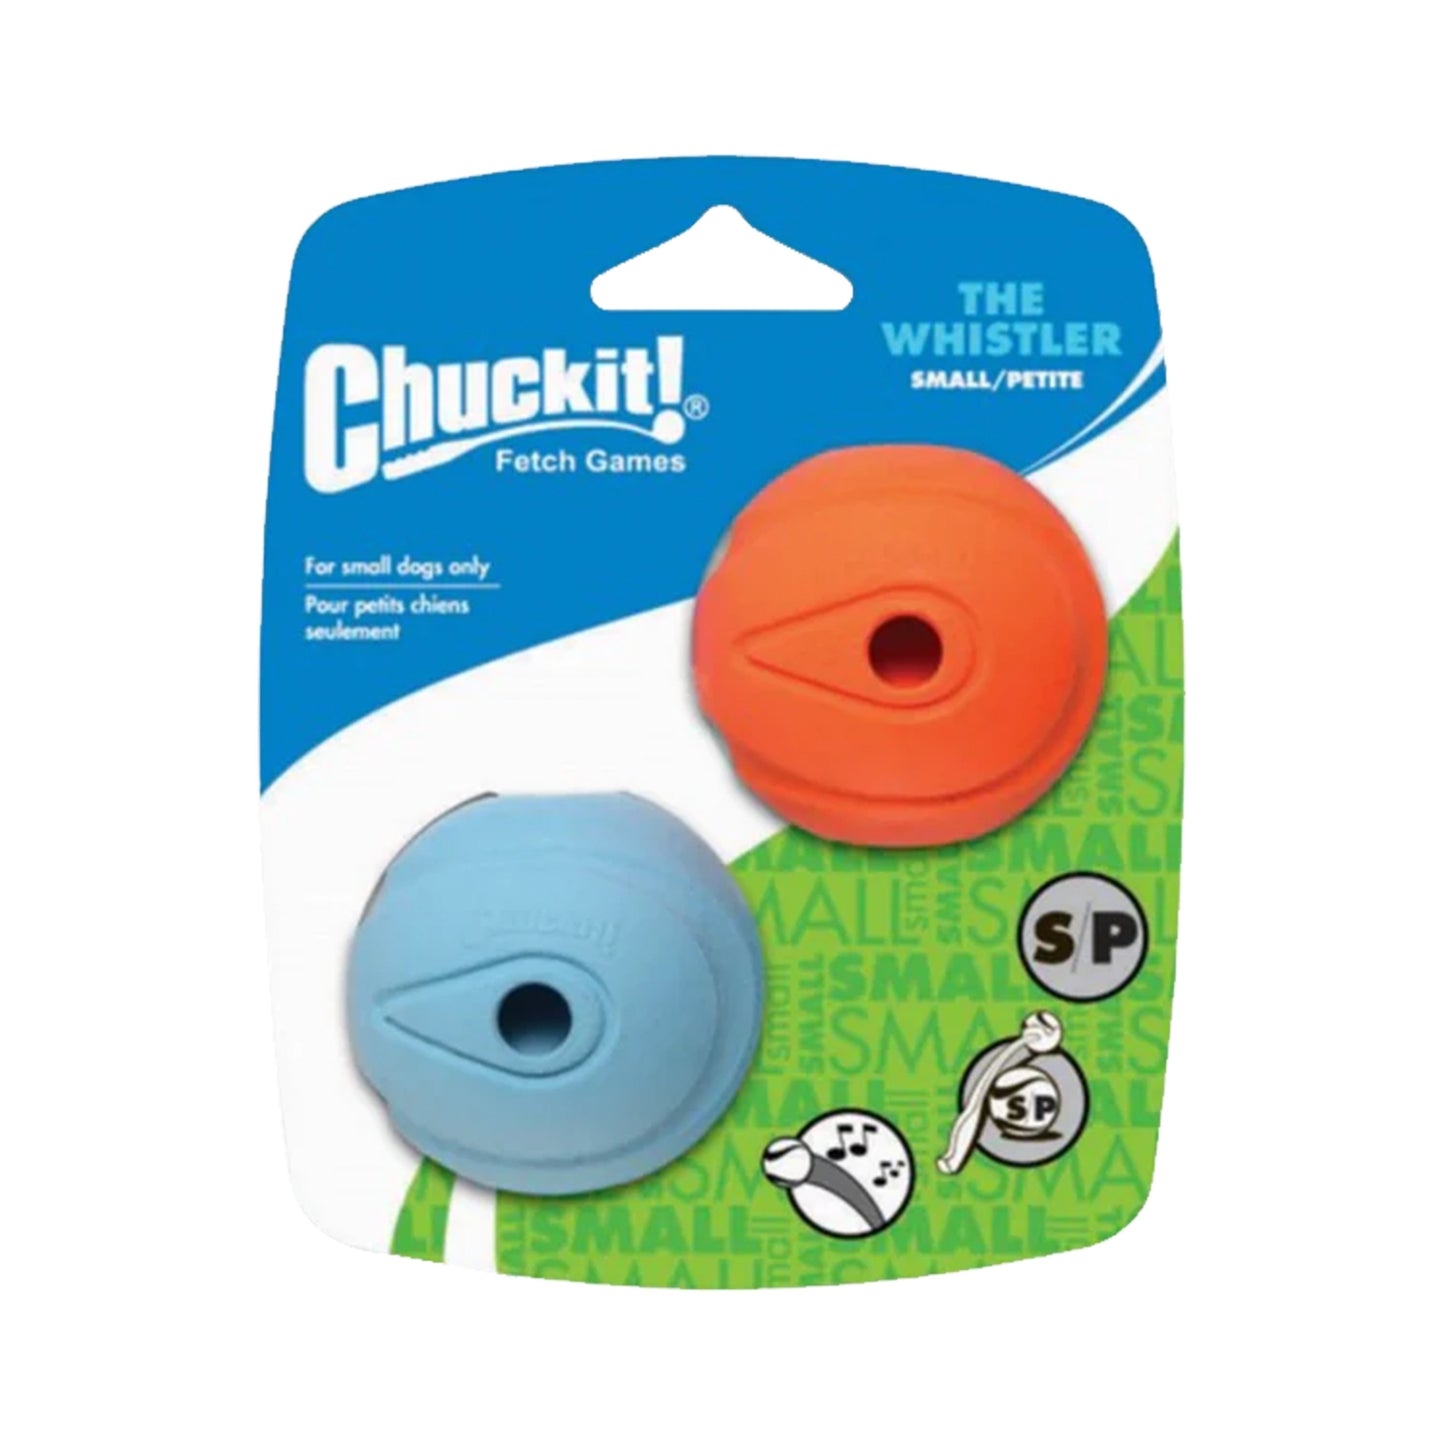 Chuckit! The Whistler Ball Dog Toy Small 2pk, Chuckit!